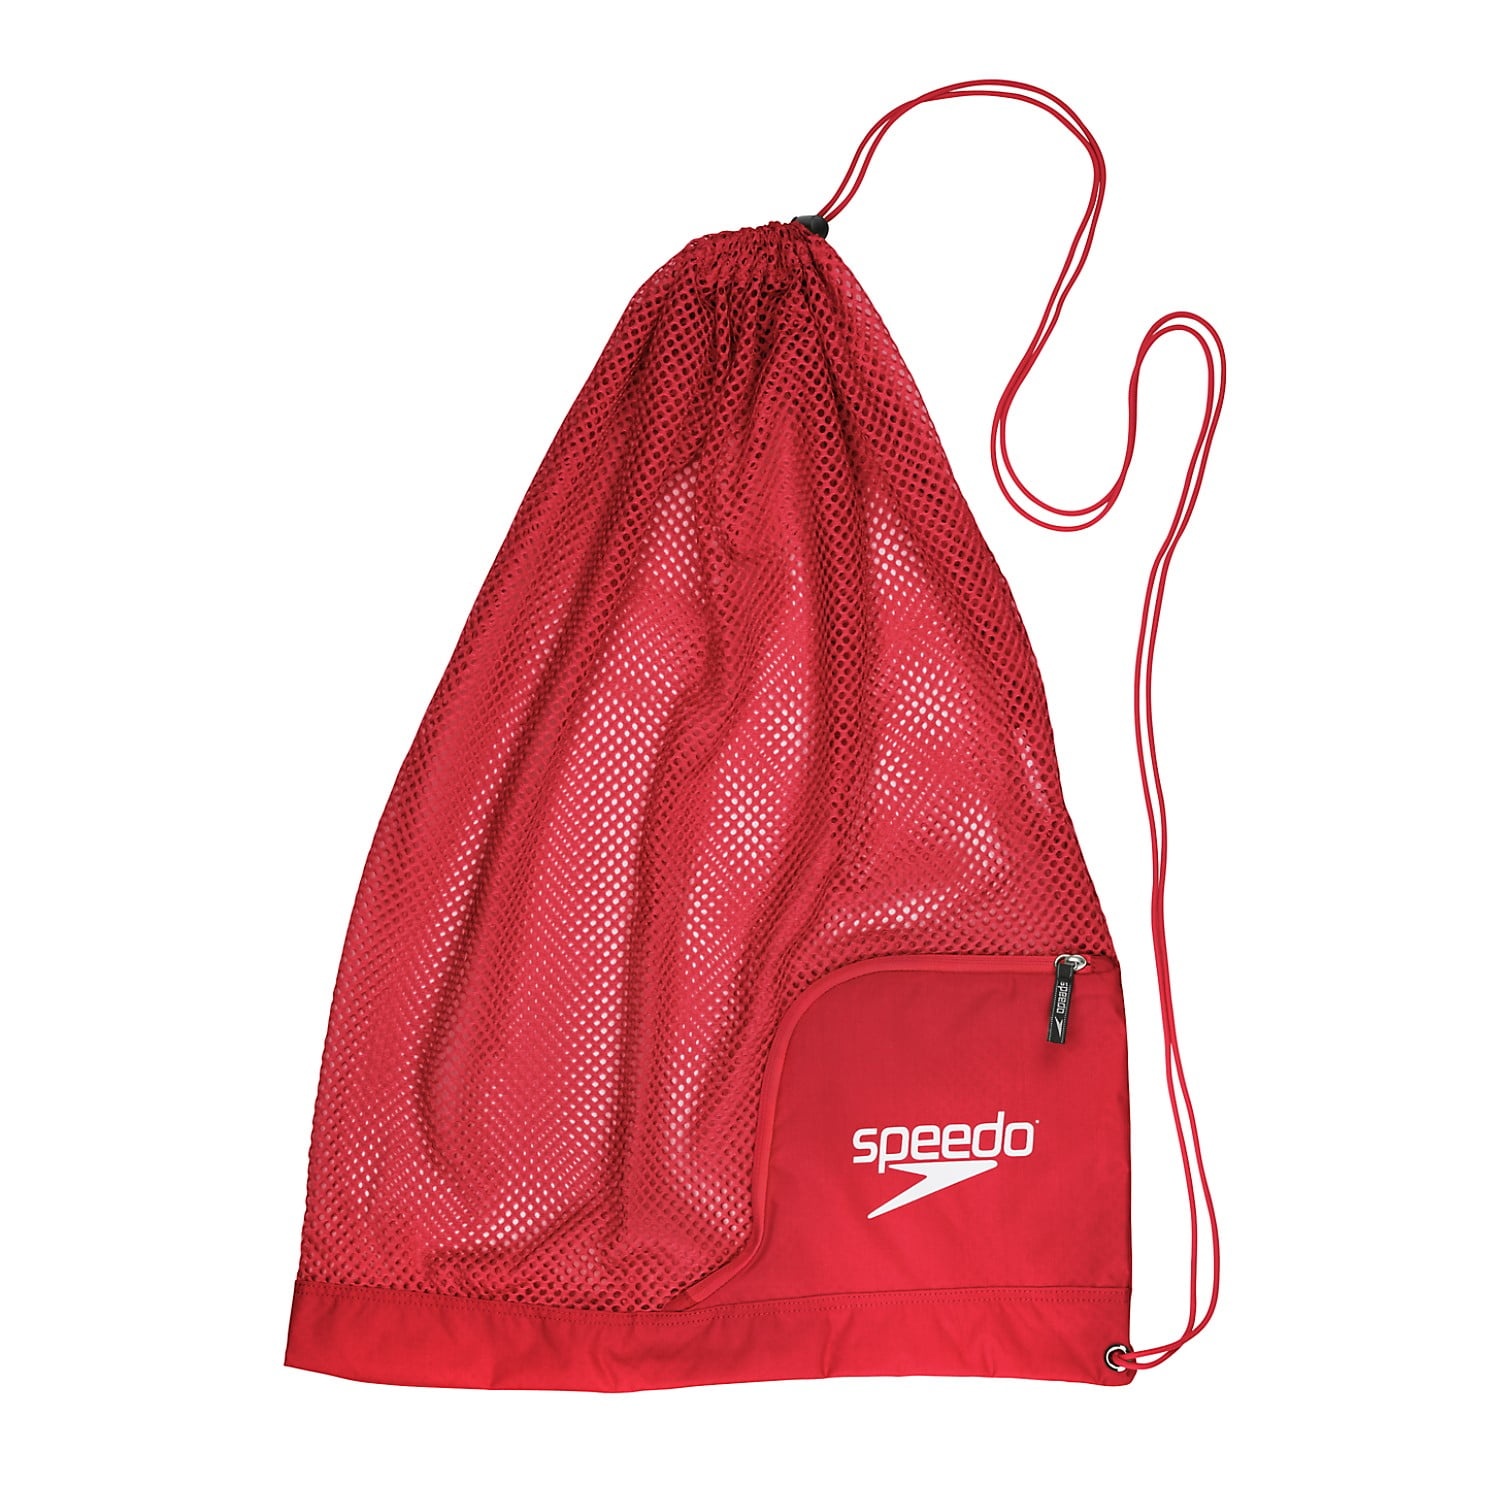 Speedo Ventilator Mesh Equipment Bag 